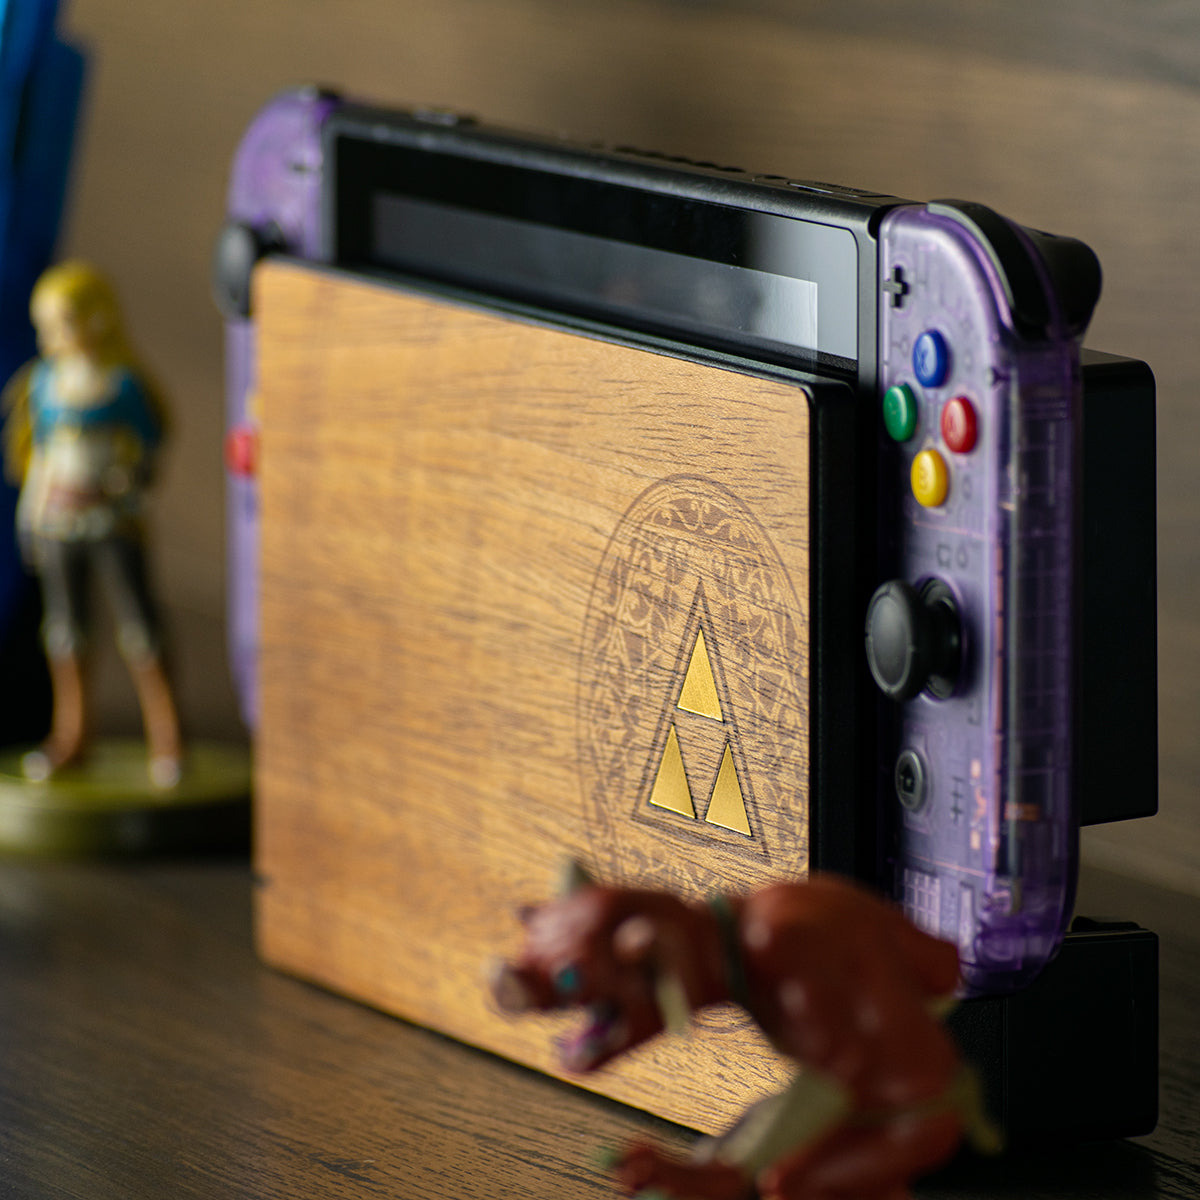 Zelda Inspired Nintendo Switch Full Set by Nintendo: Cheap Nintendo Switch